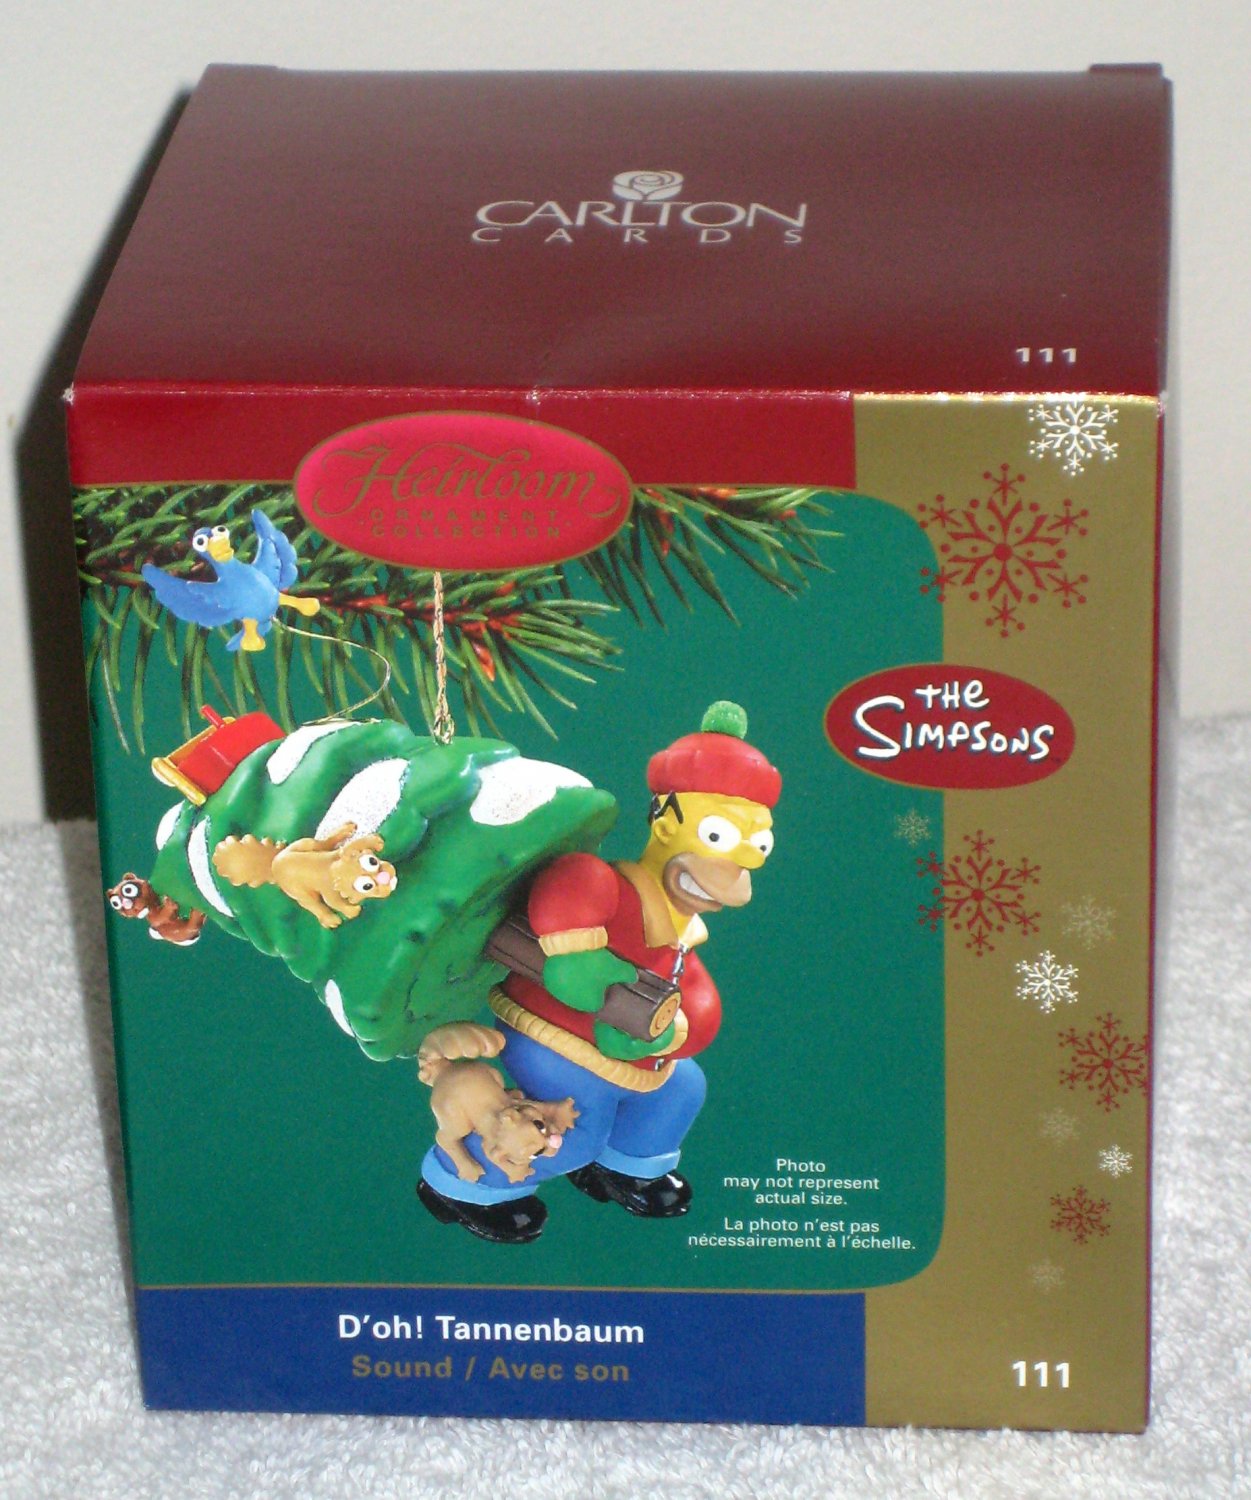 Doh! Tannenbaum Homer Simpson Carlton Heirloom Collection Christmas Ornament 111 2005 NIB